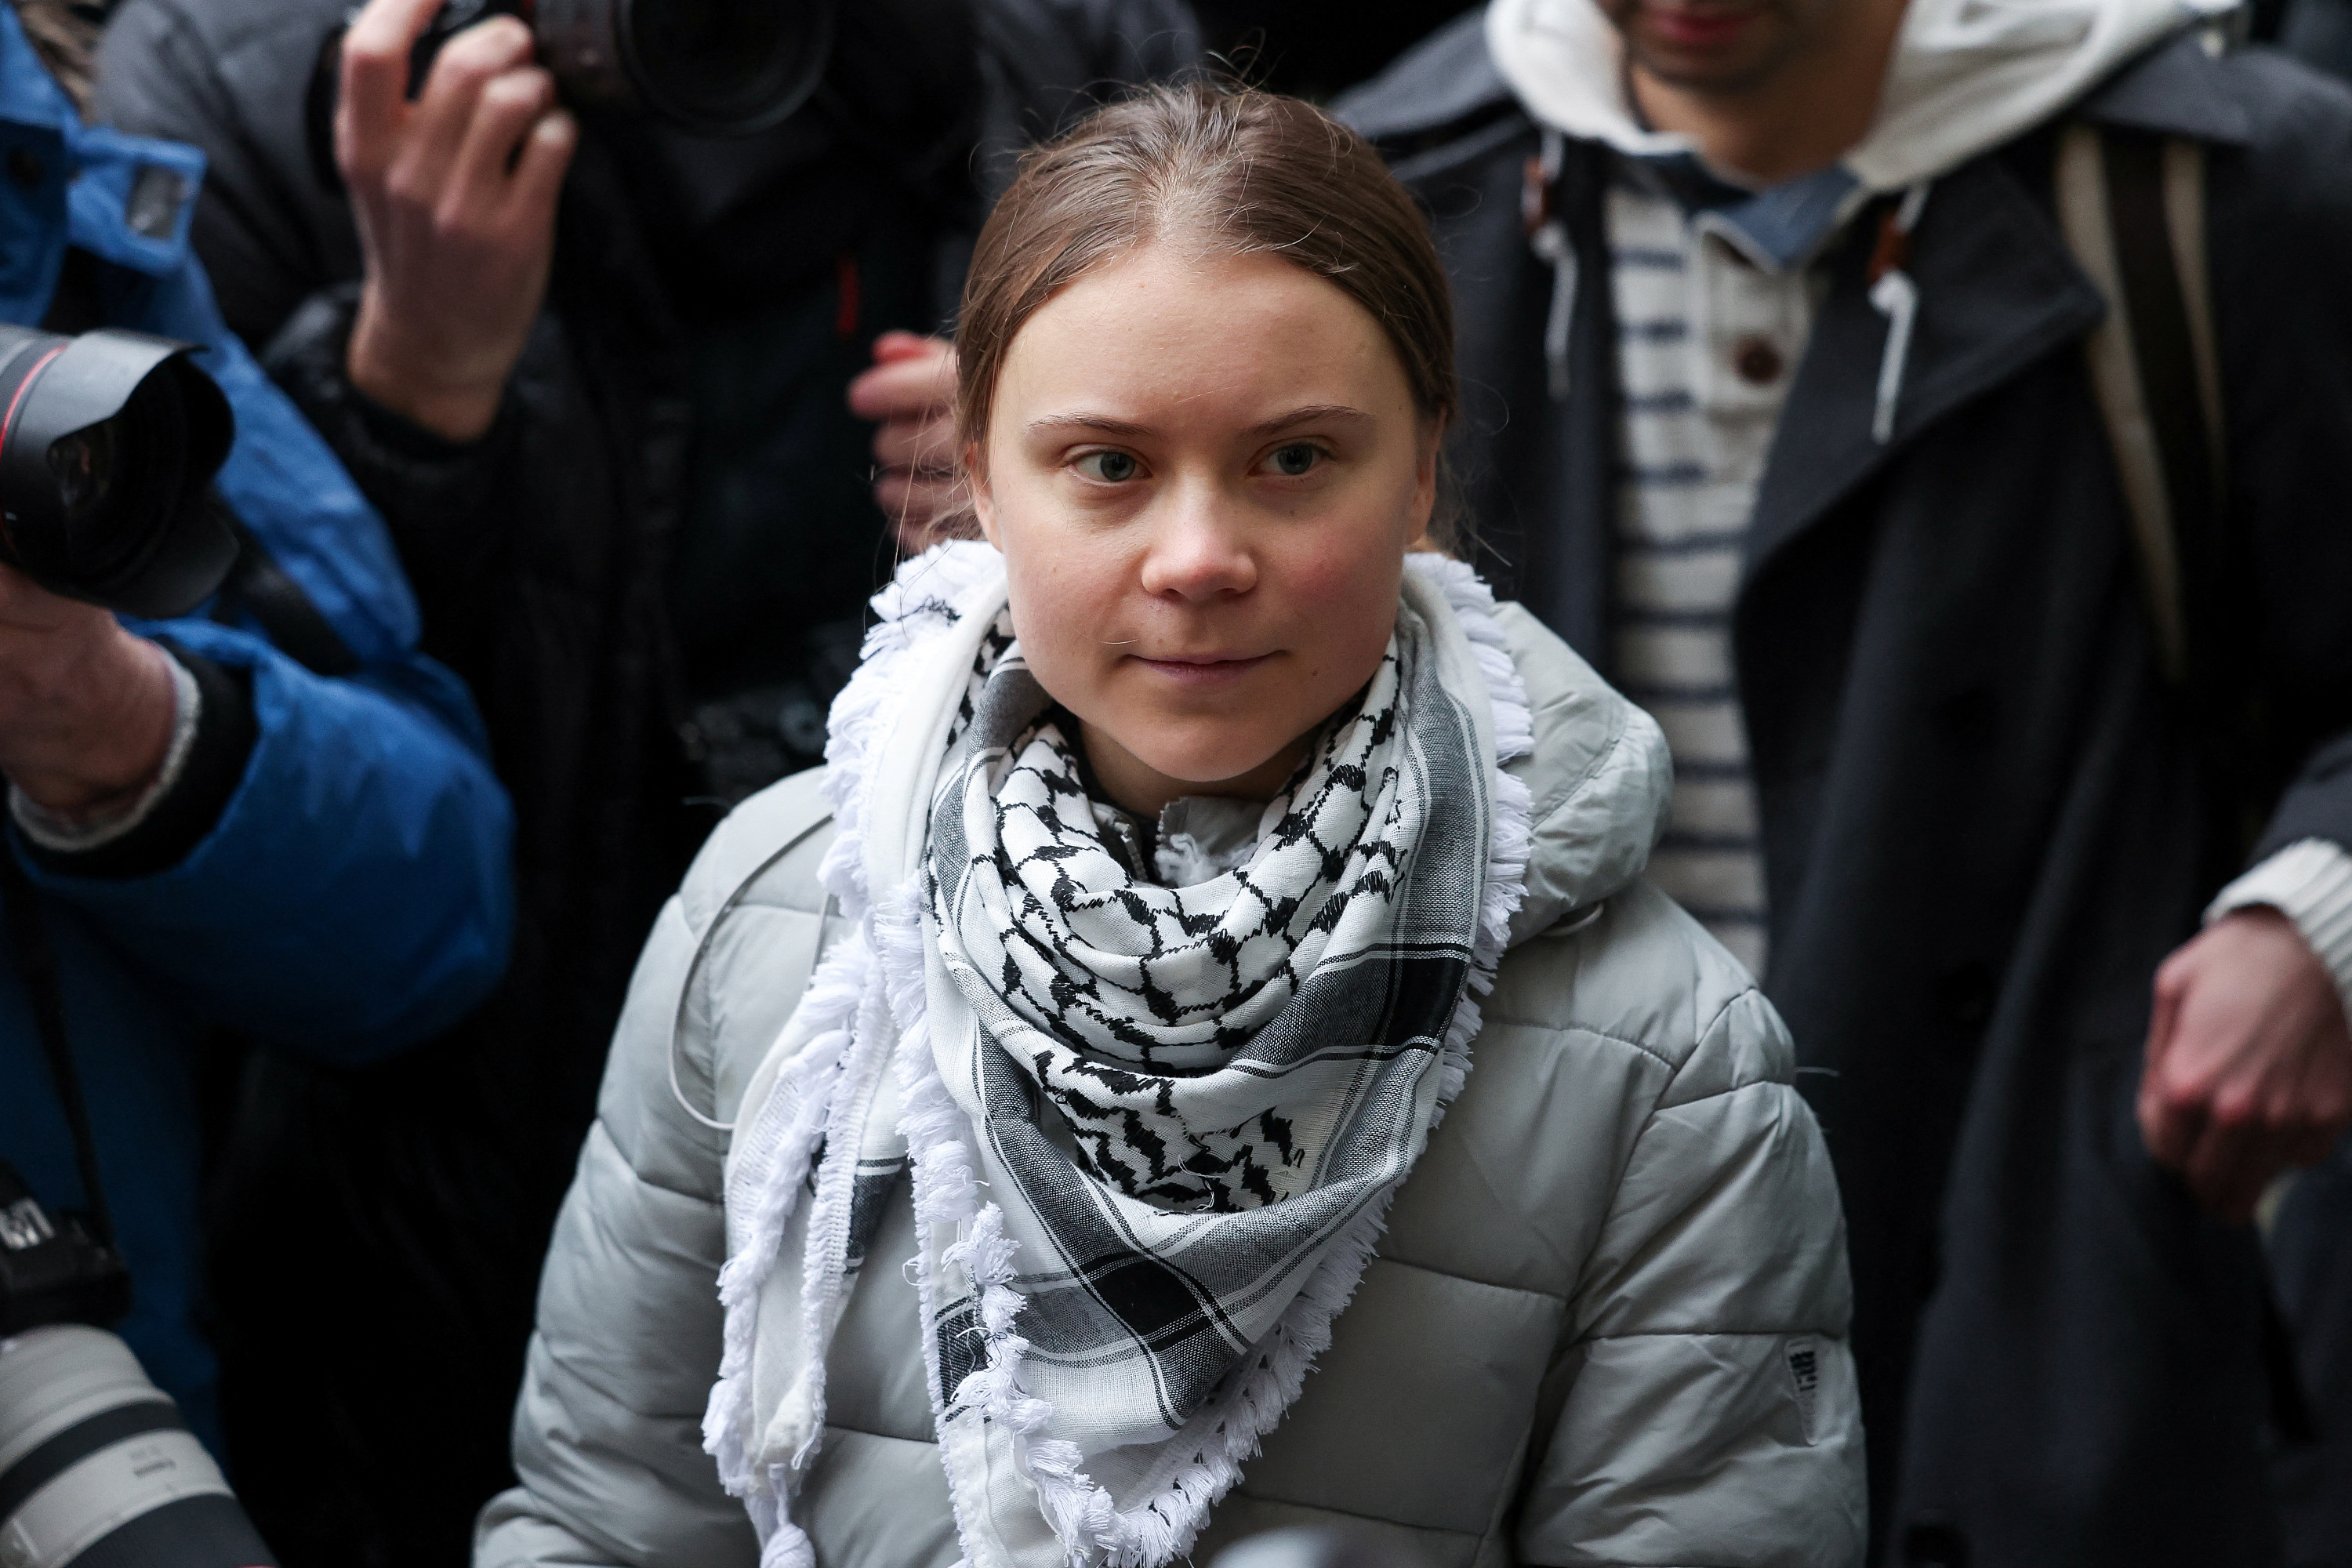 Increasingly divisive, Greta Thunberg is no longer afraid of arrests